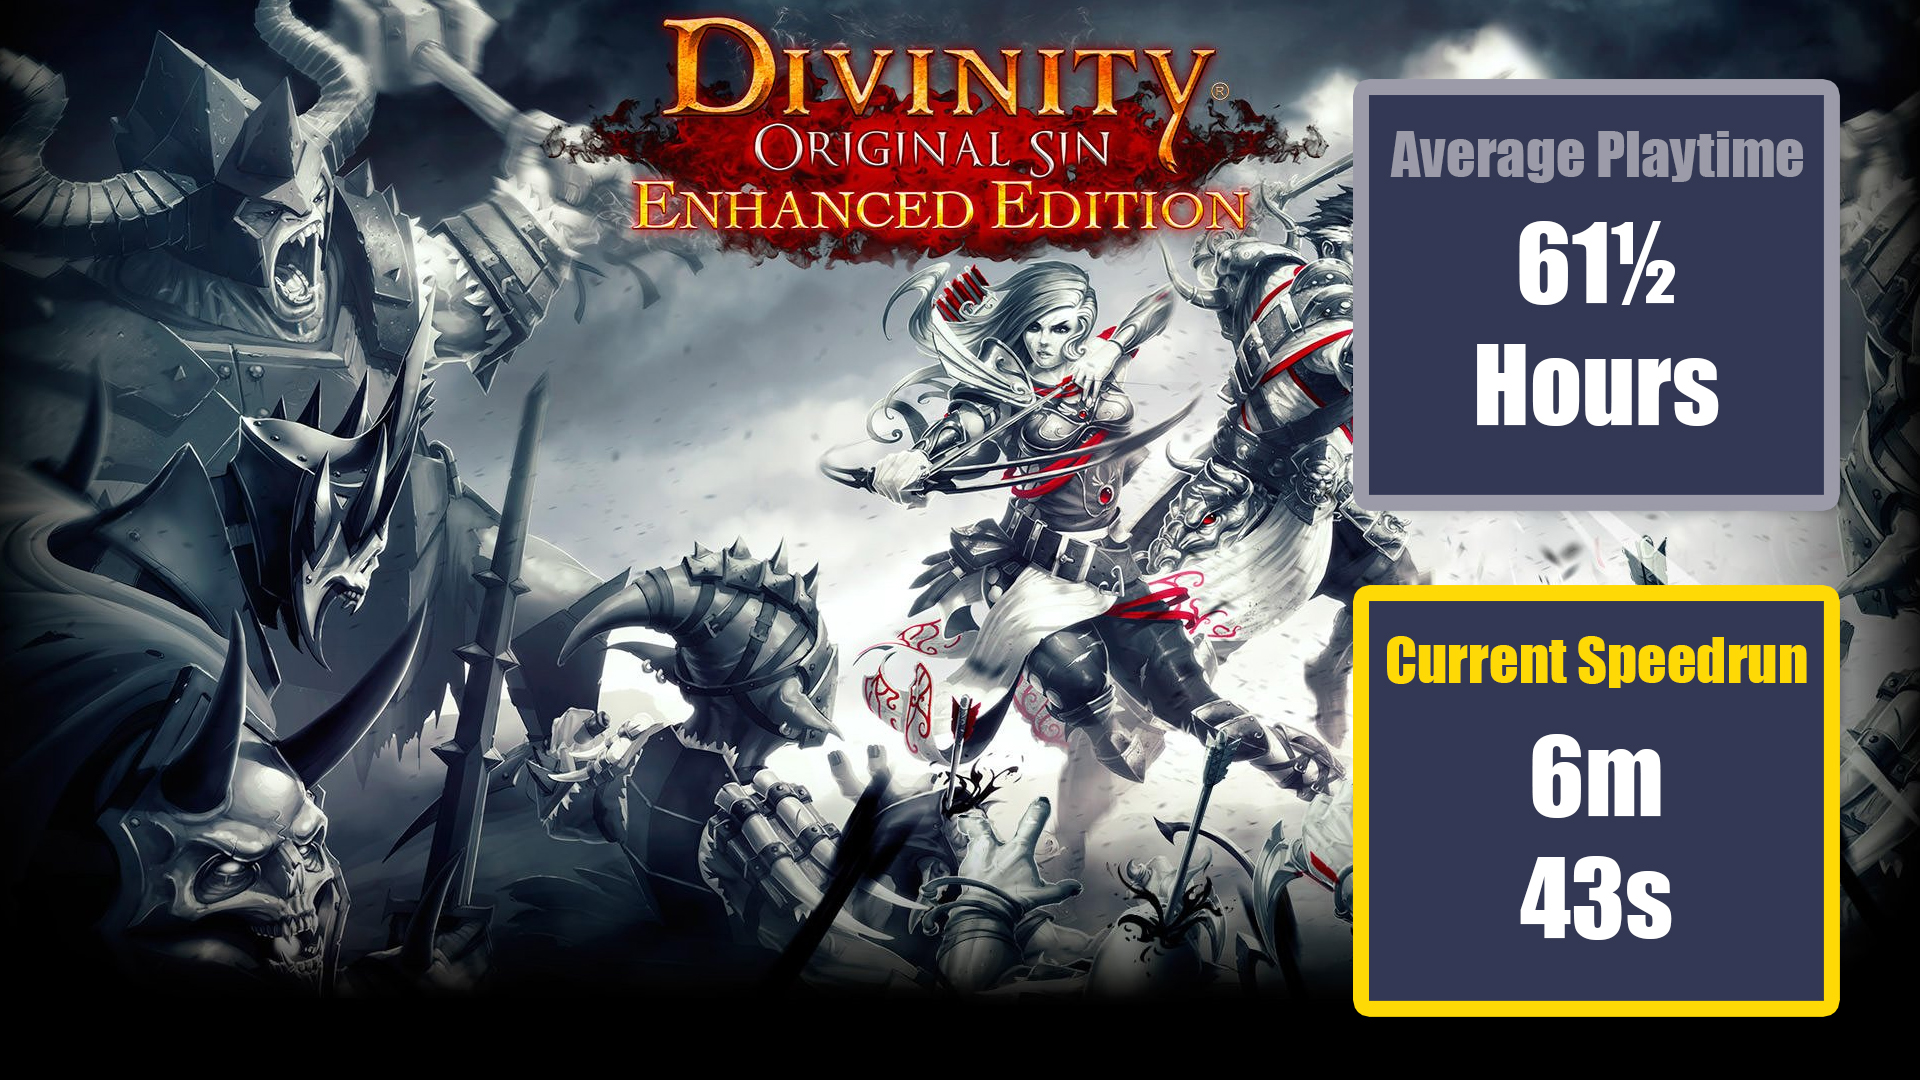 fast video game speed runs - Divinity: Original Sin Enhanced Edition